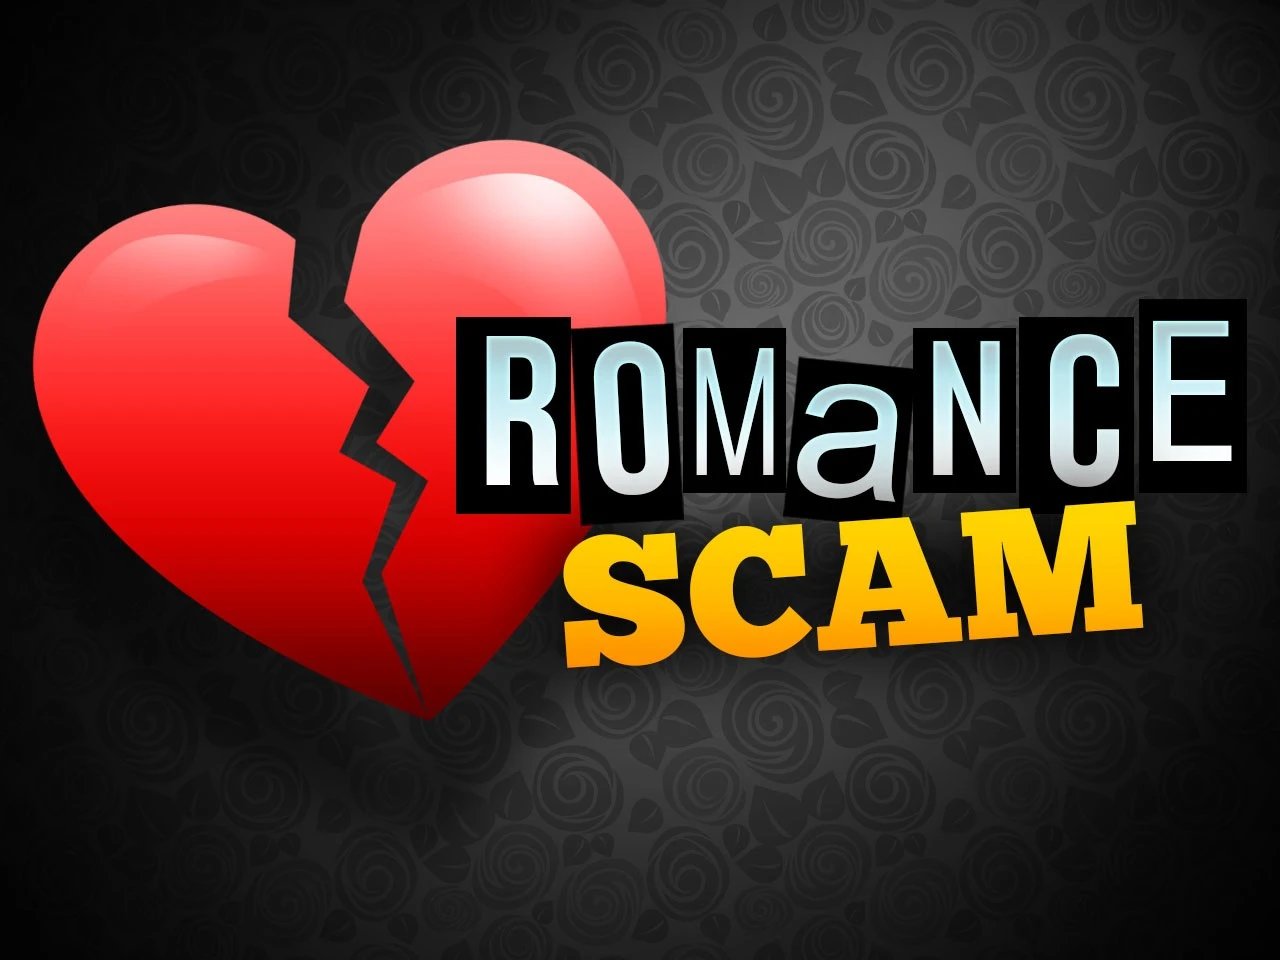 Thai Woman Embezzles US$182 Million in Romance Scam